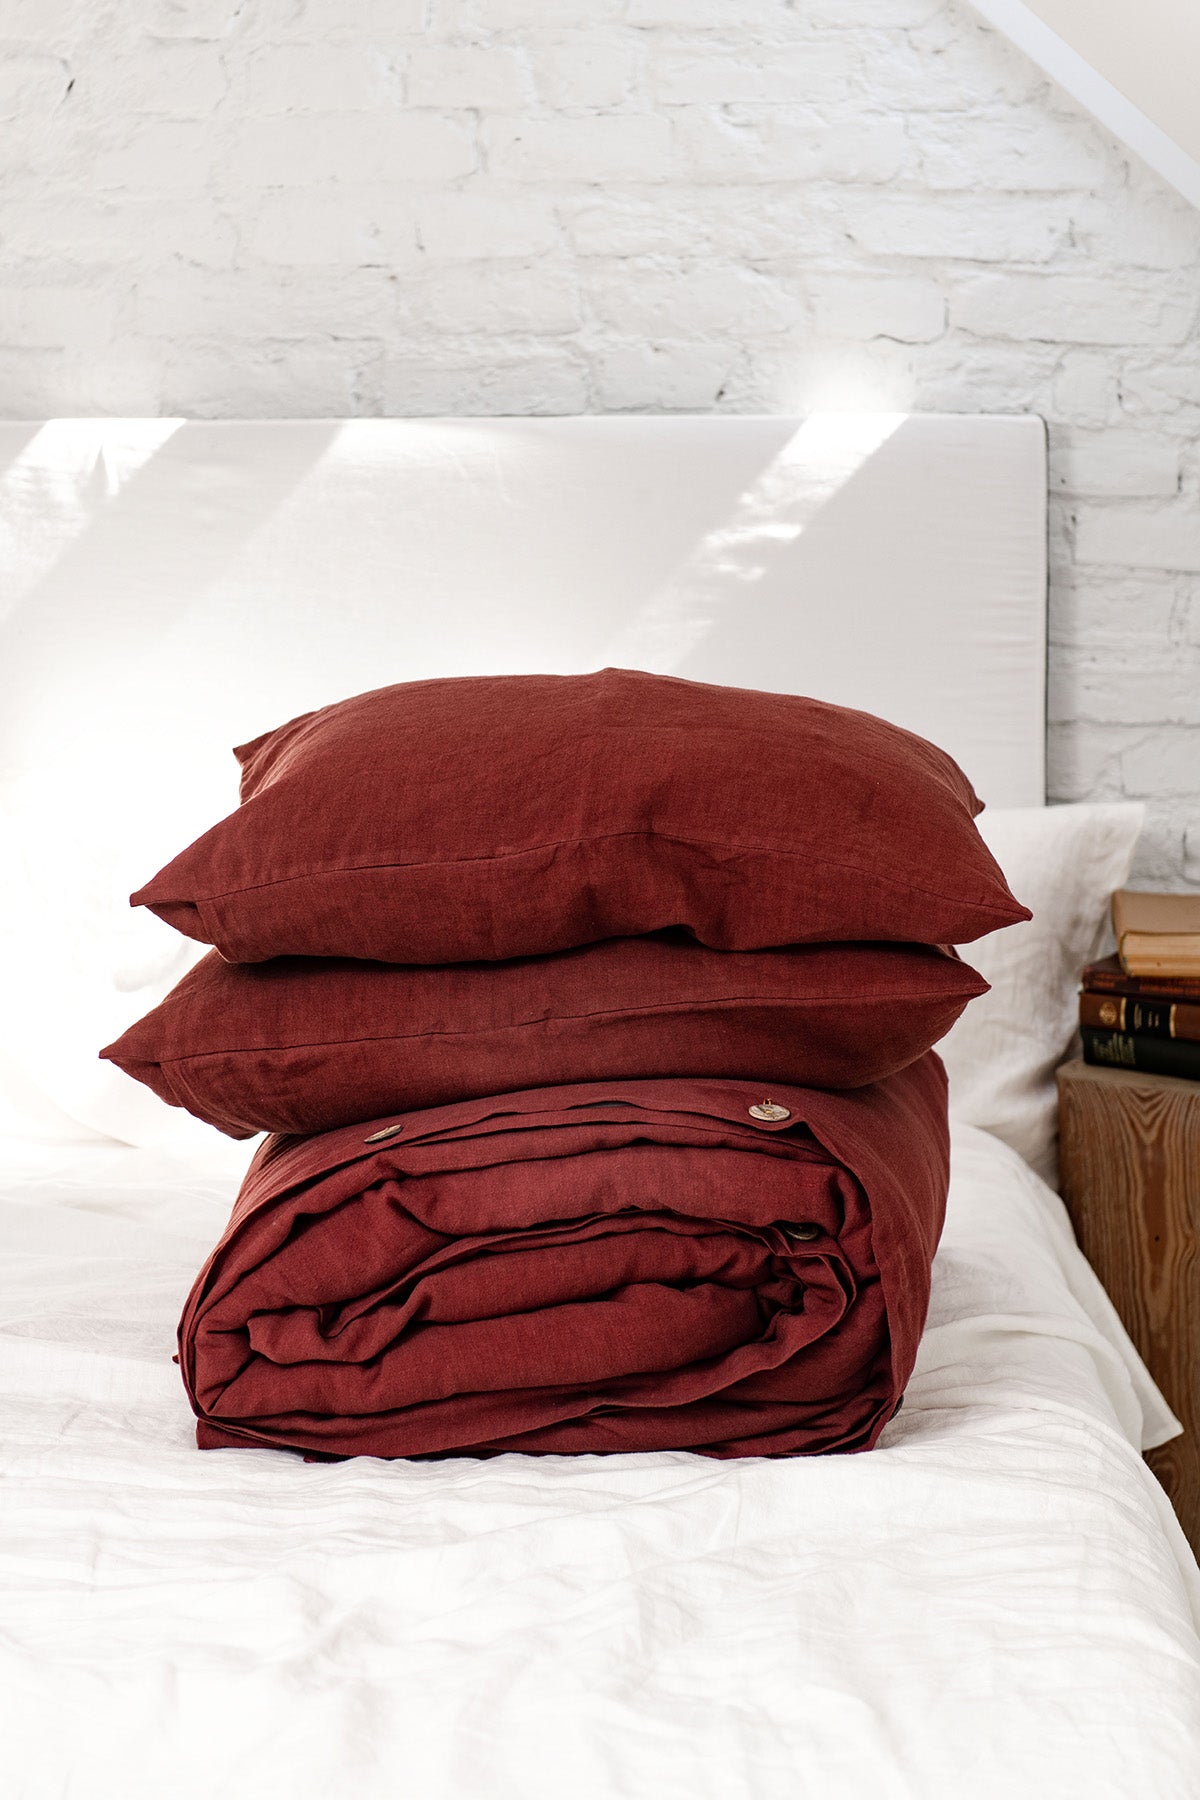 Linen Tea Towels 2 Pcs. BURGUNDY RED Towel Set. Softened 